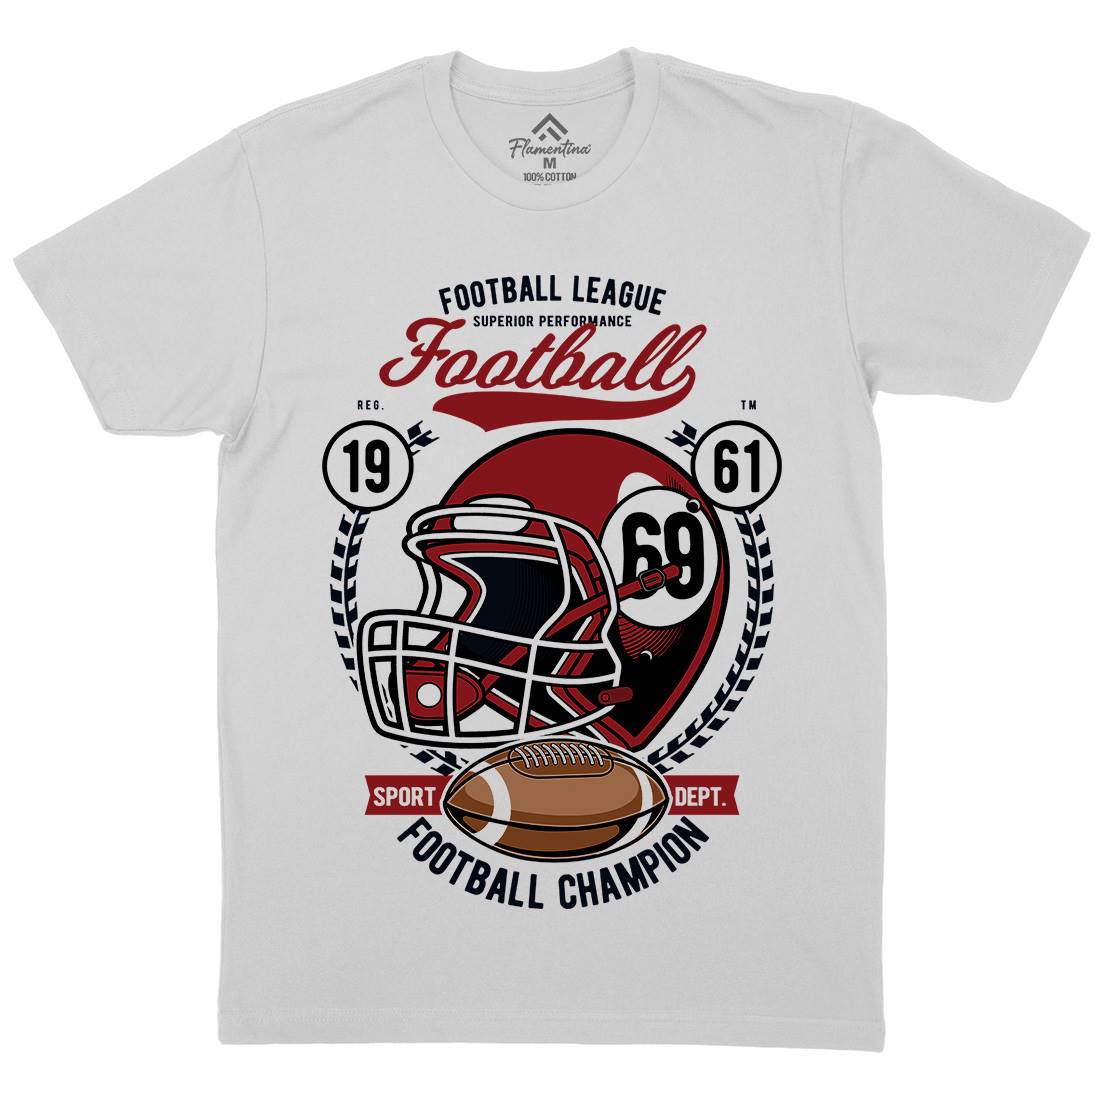 Football League Helmet Mens Crew Neck T-Shirt Sport C362